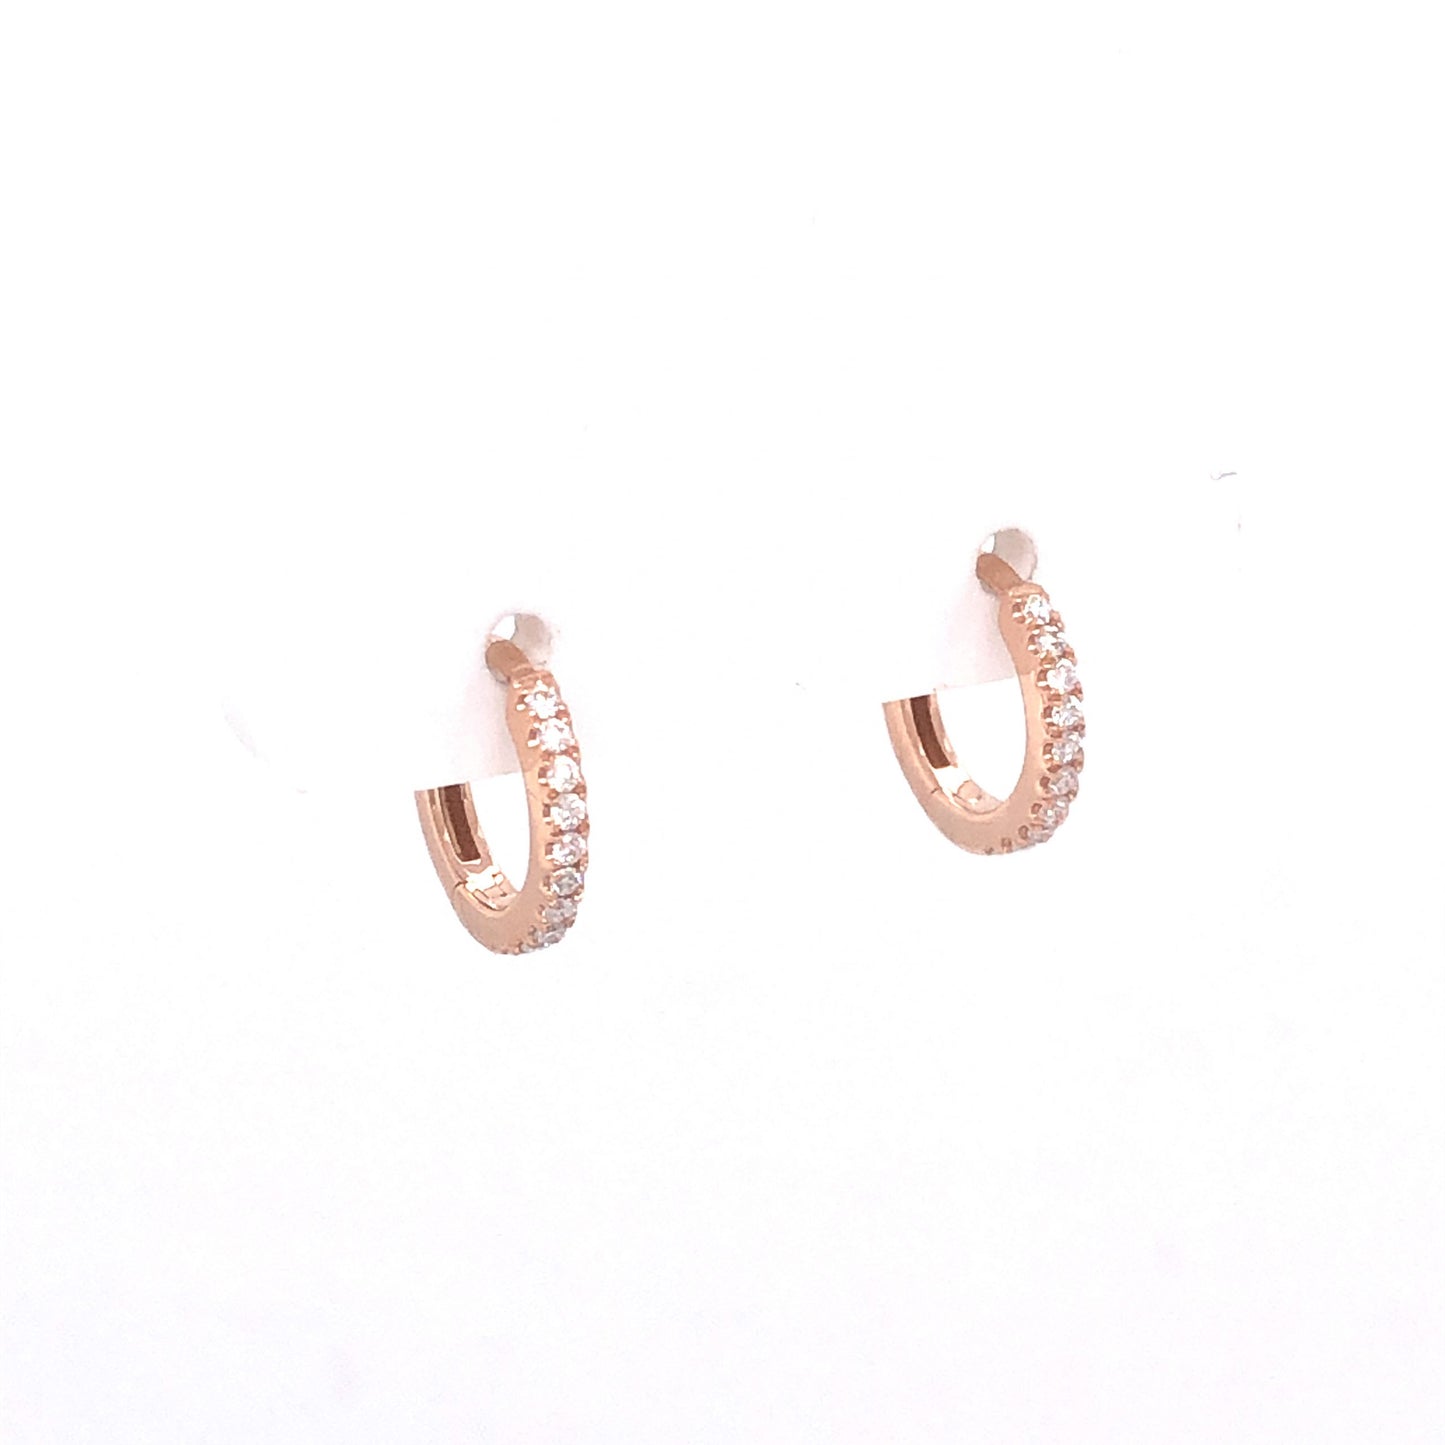 .10 Mini Diamond Hoop Earrings in 14k Rose Gold